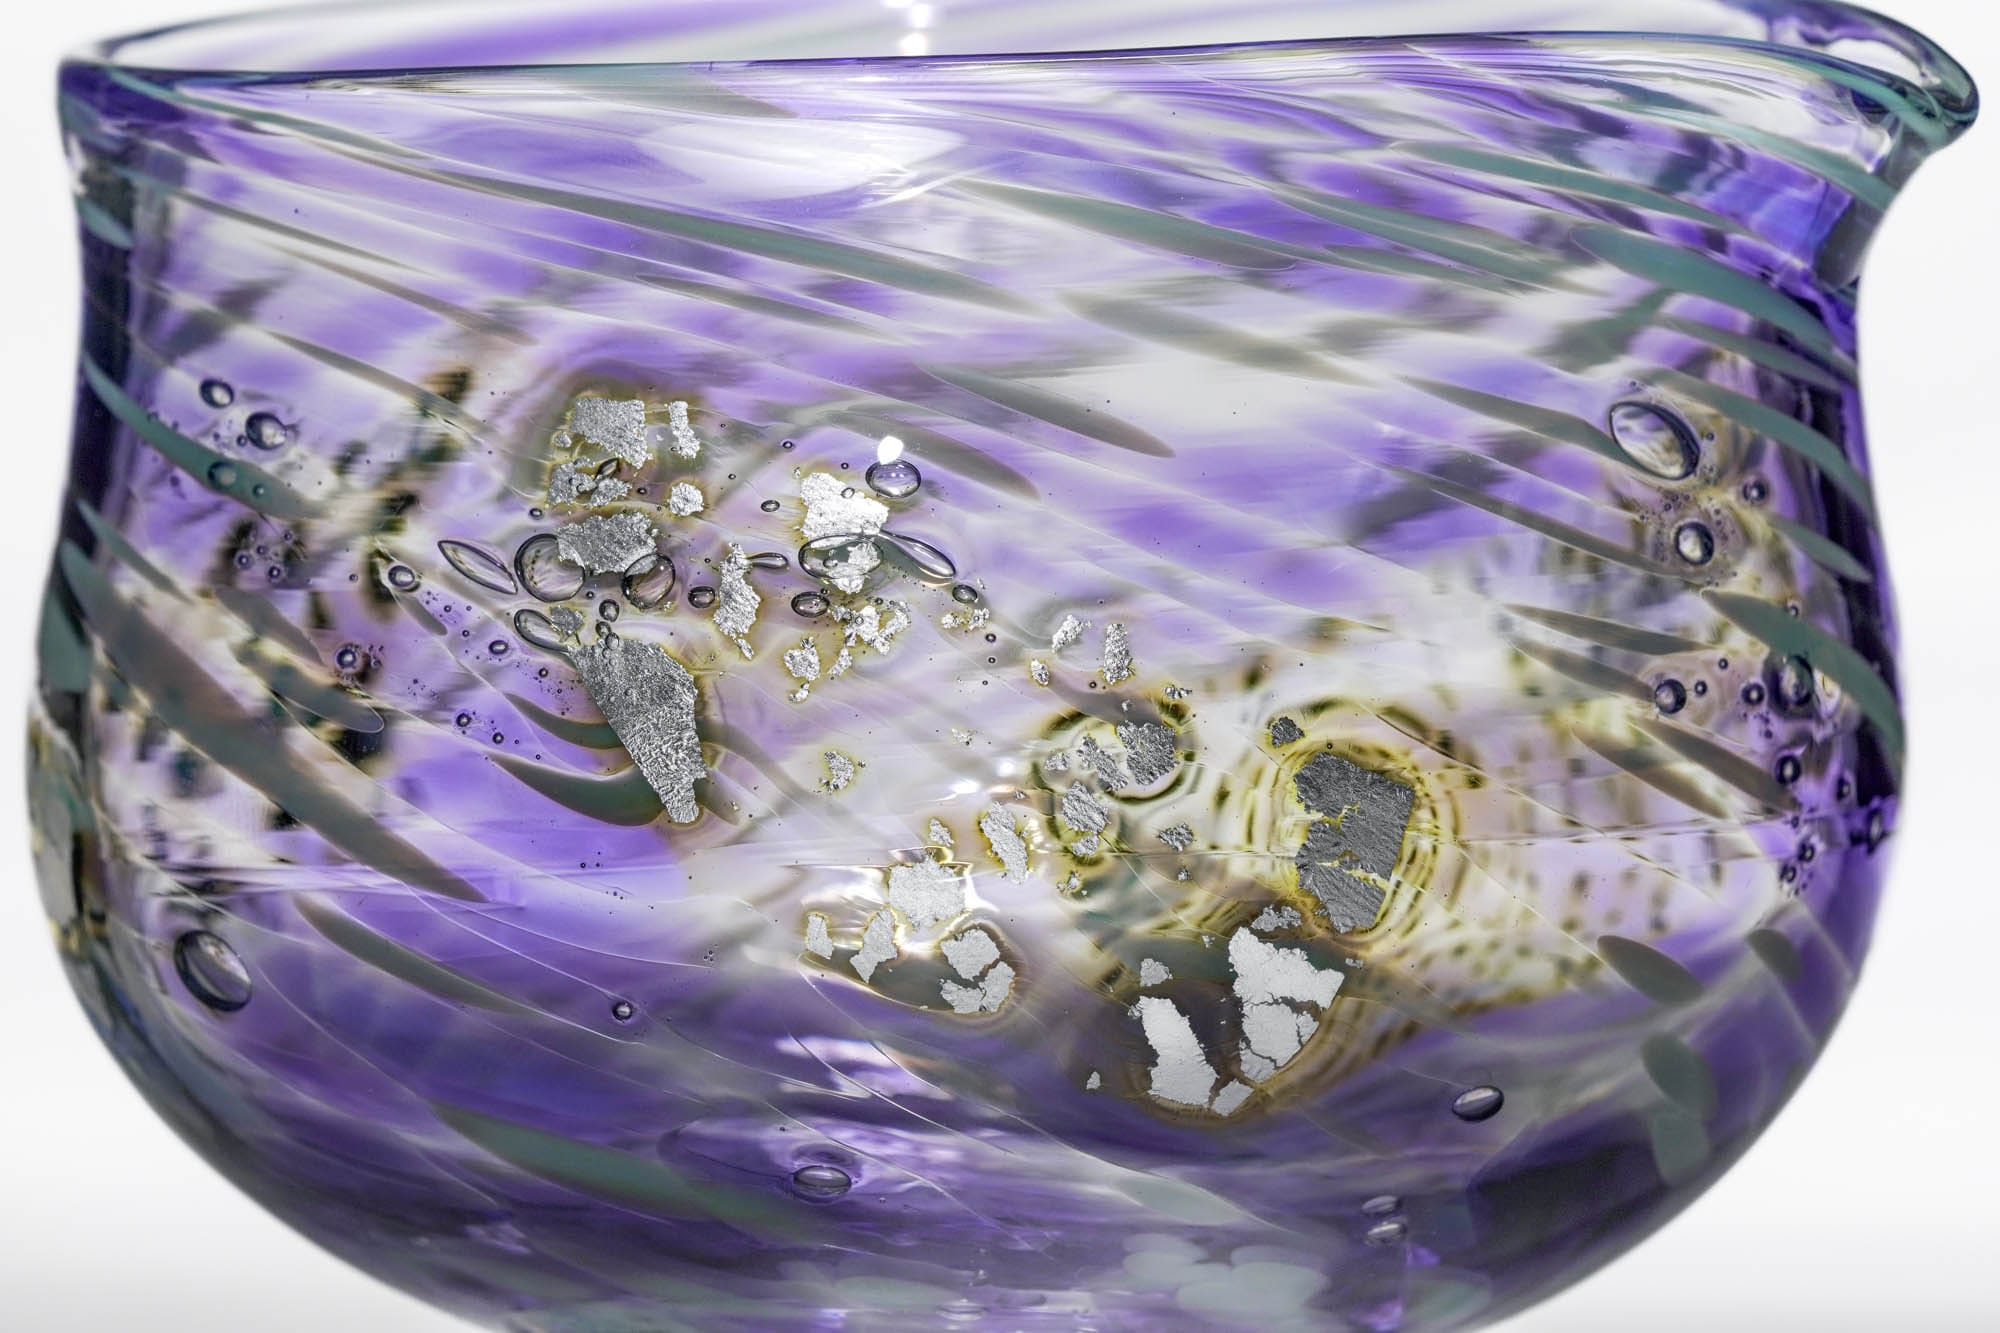 Japanese Matcha Bowl - 翠華園 Suikaen - 宙 Purple Sora Glass Pouring Chawan - 200ml